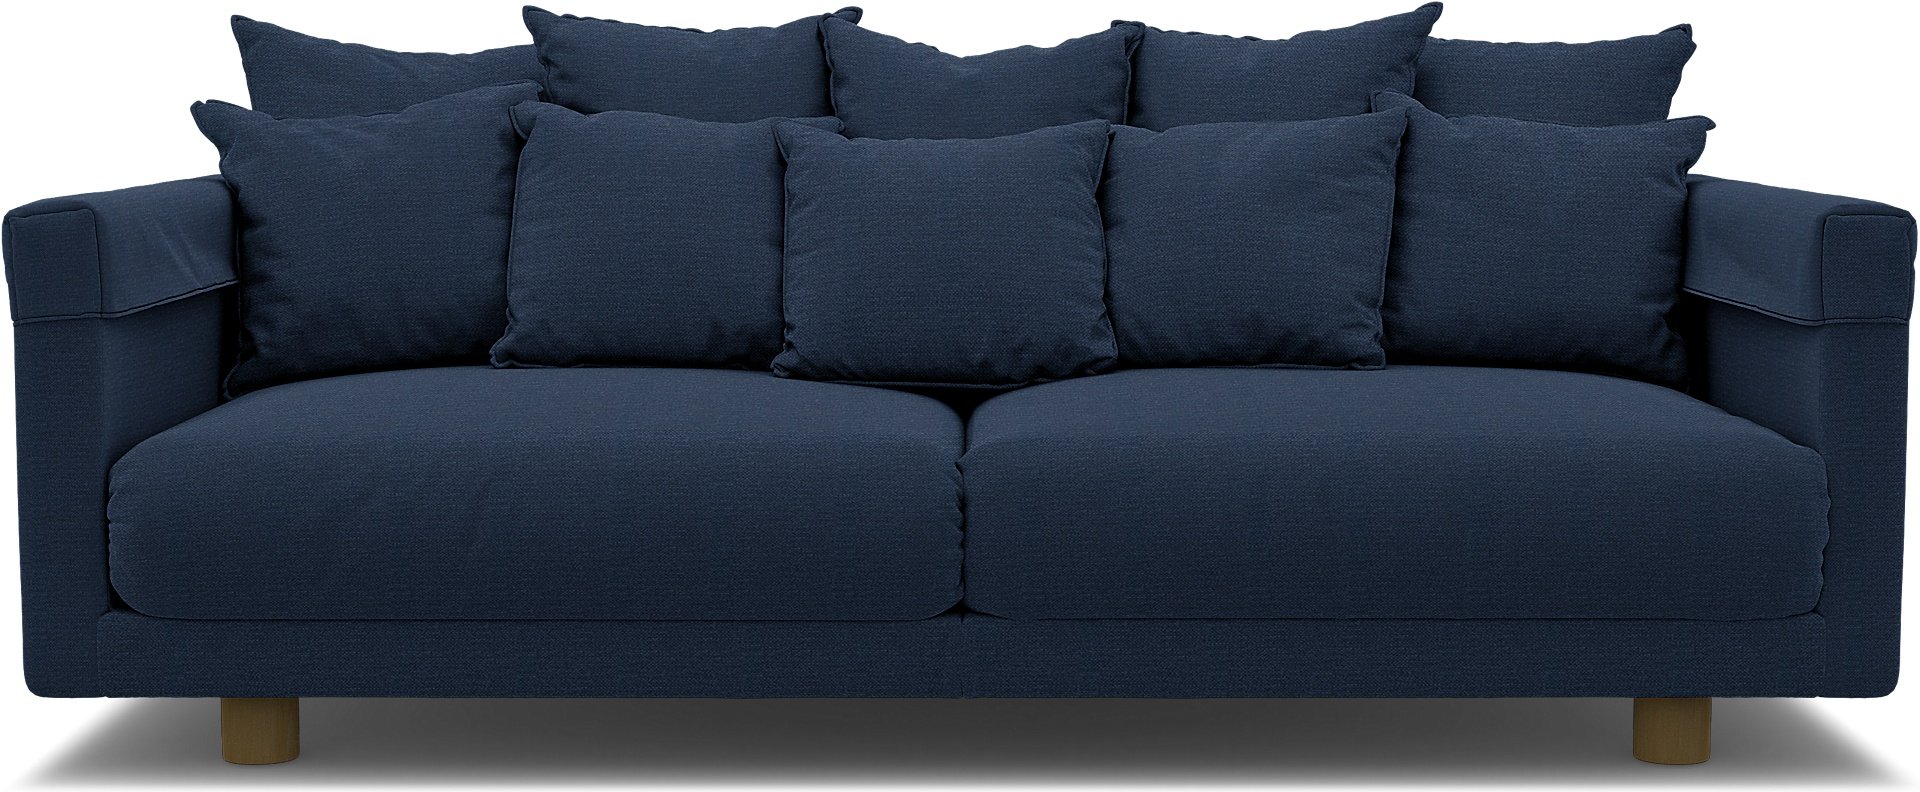 IKEA - Stockholm 2017 3 Seater Sofa Cover, Navy Blue, Linen - Bemz